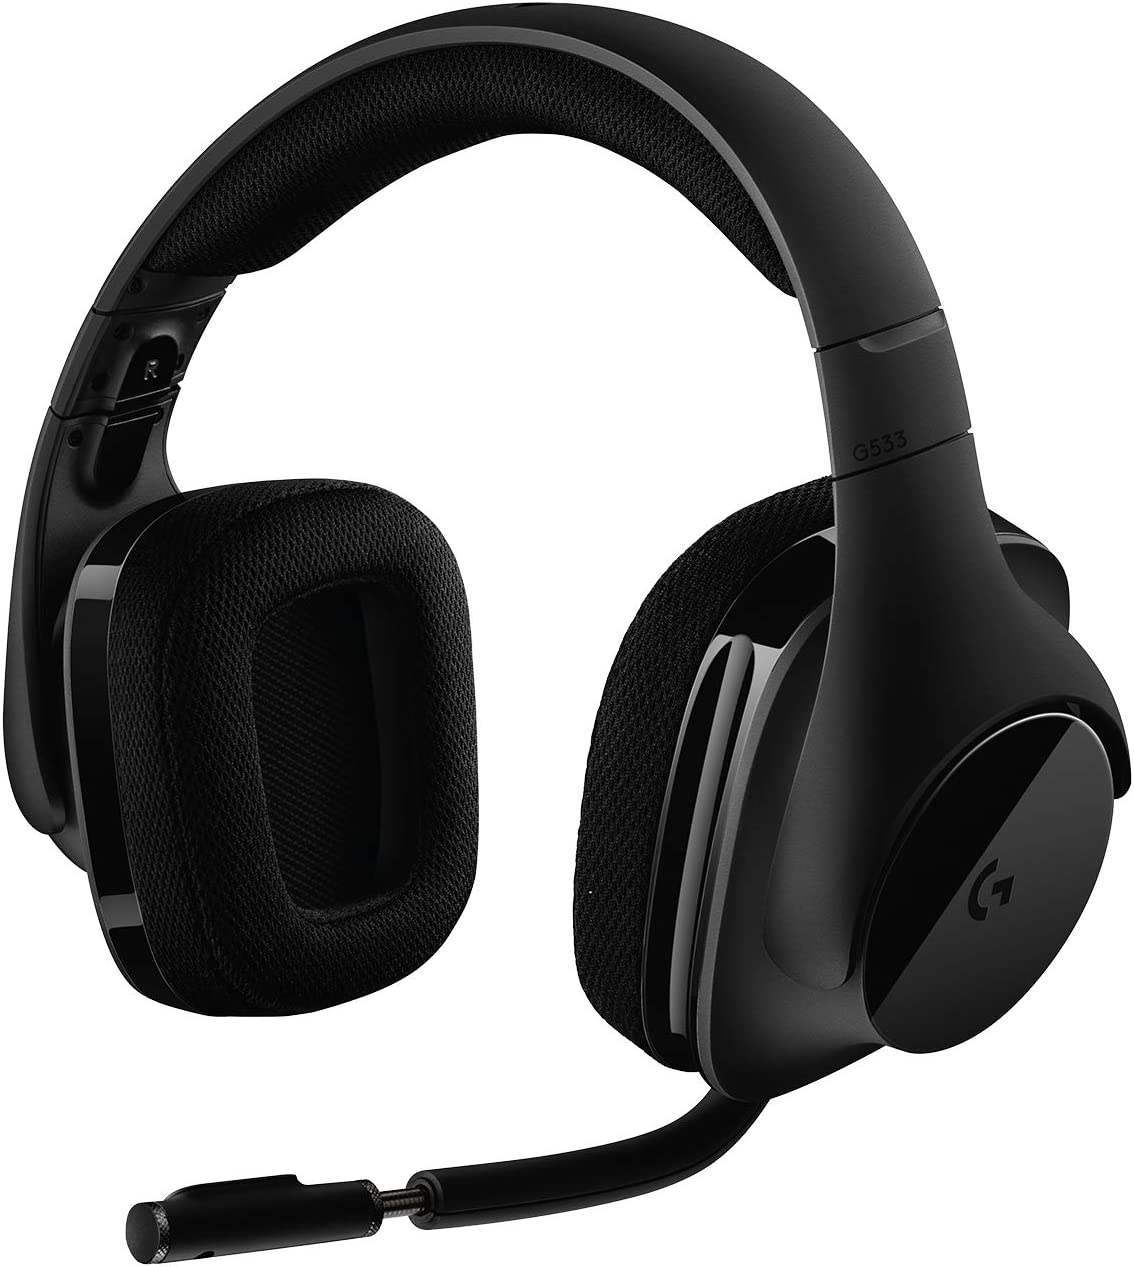 (C) Logitech G533 wireless gaming headset, 7.1 surround sound